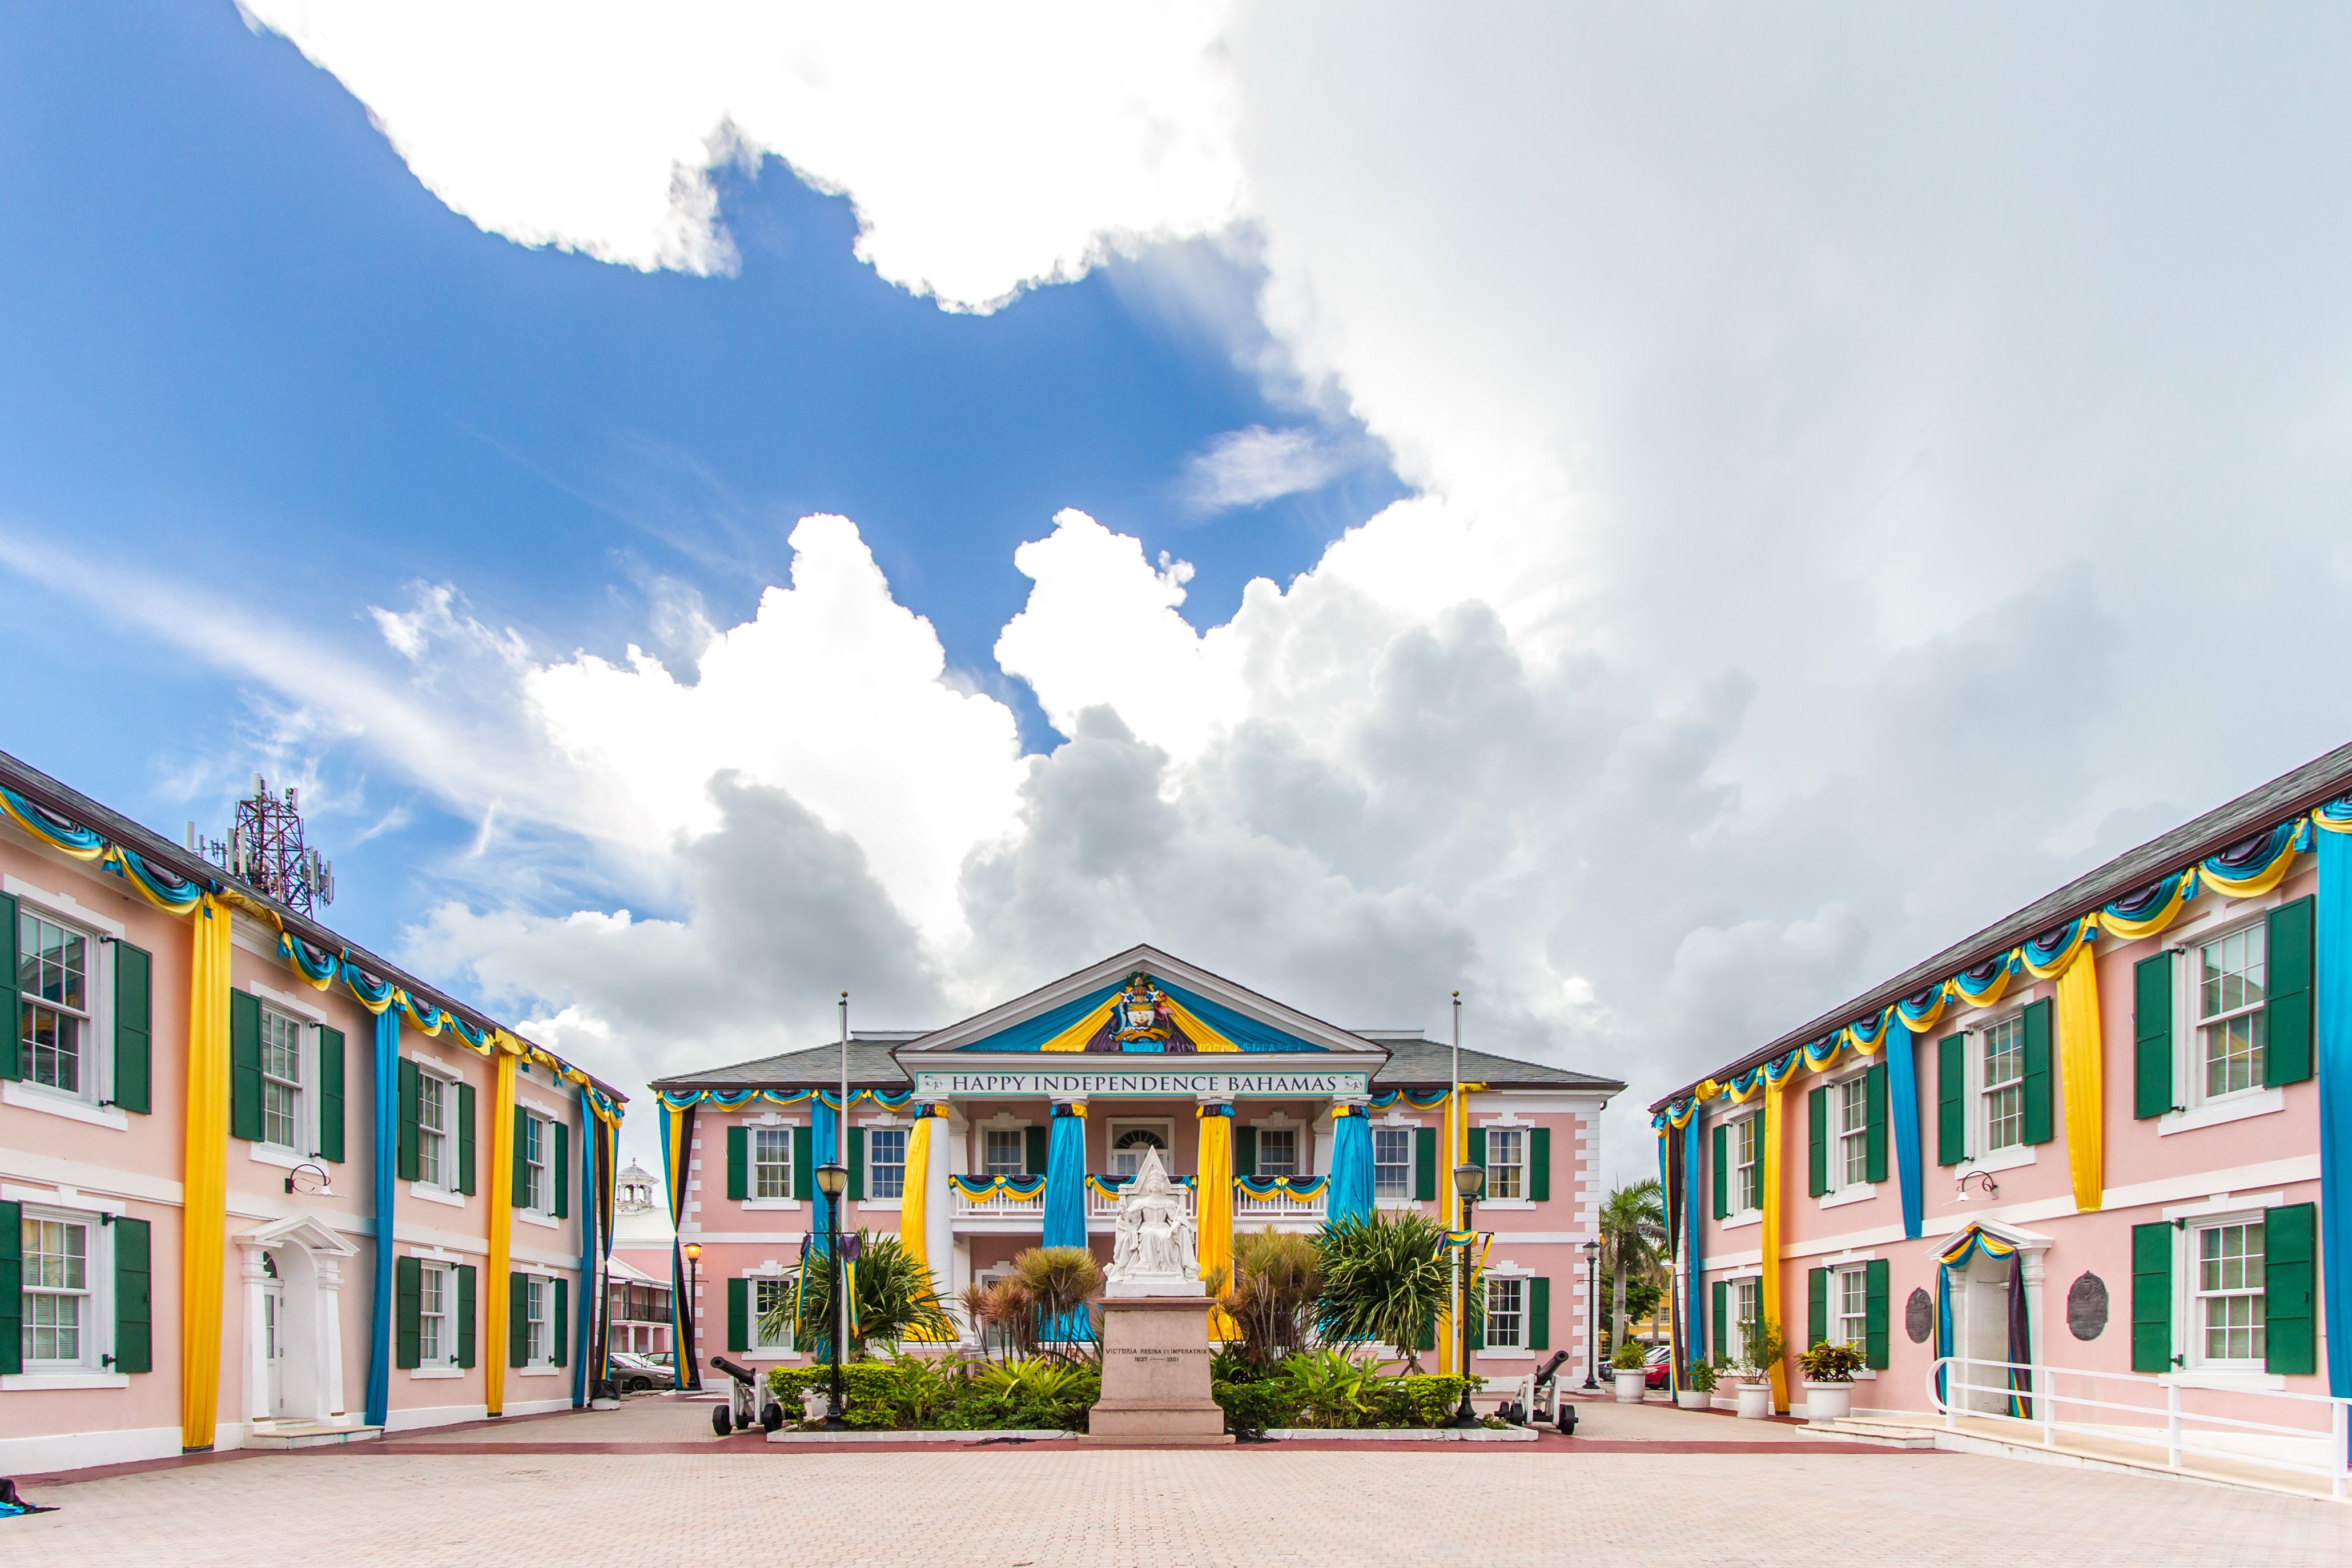 Parliament Square in Nassau, Bahamas